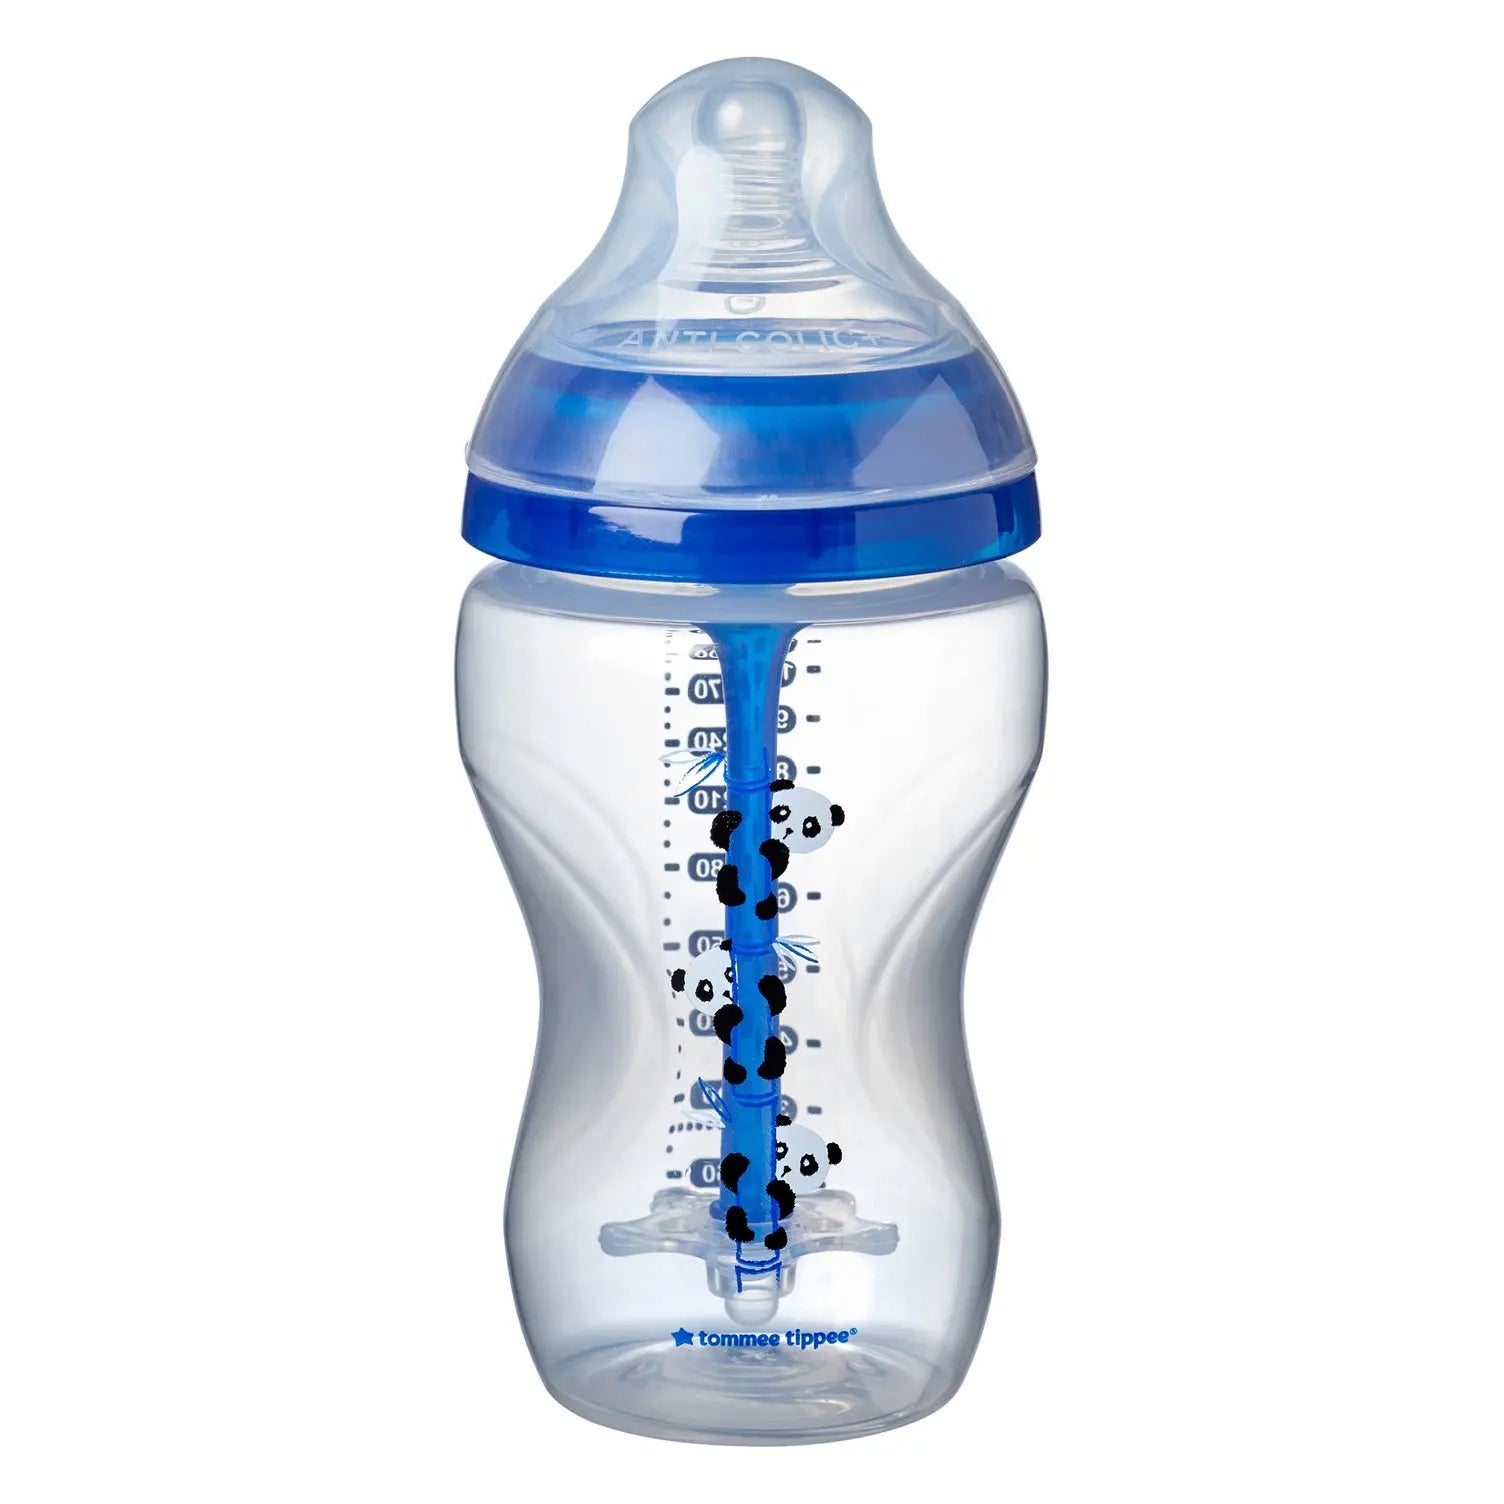 Tommee Tippee Advanced Anti-Colic Feeding Bottle, 340ML X1 - Boy